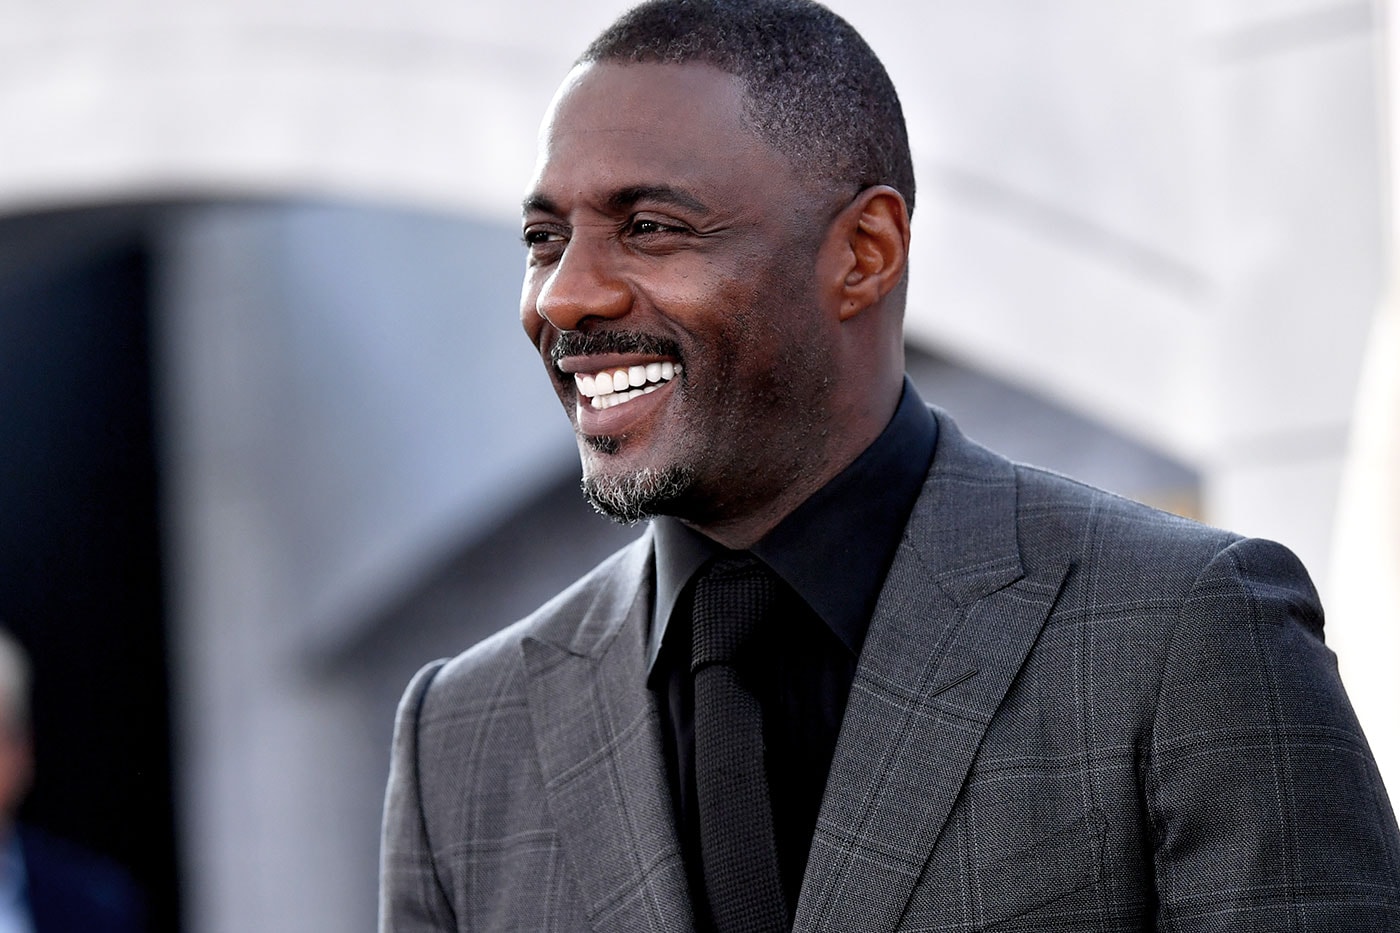 Idris Elba Currently in Talks to Star in Next James Bond Film not 007 luther british spy daniel craig no time to die netflix 